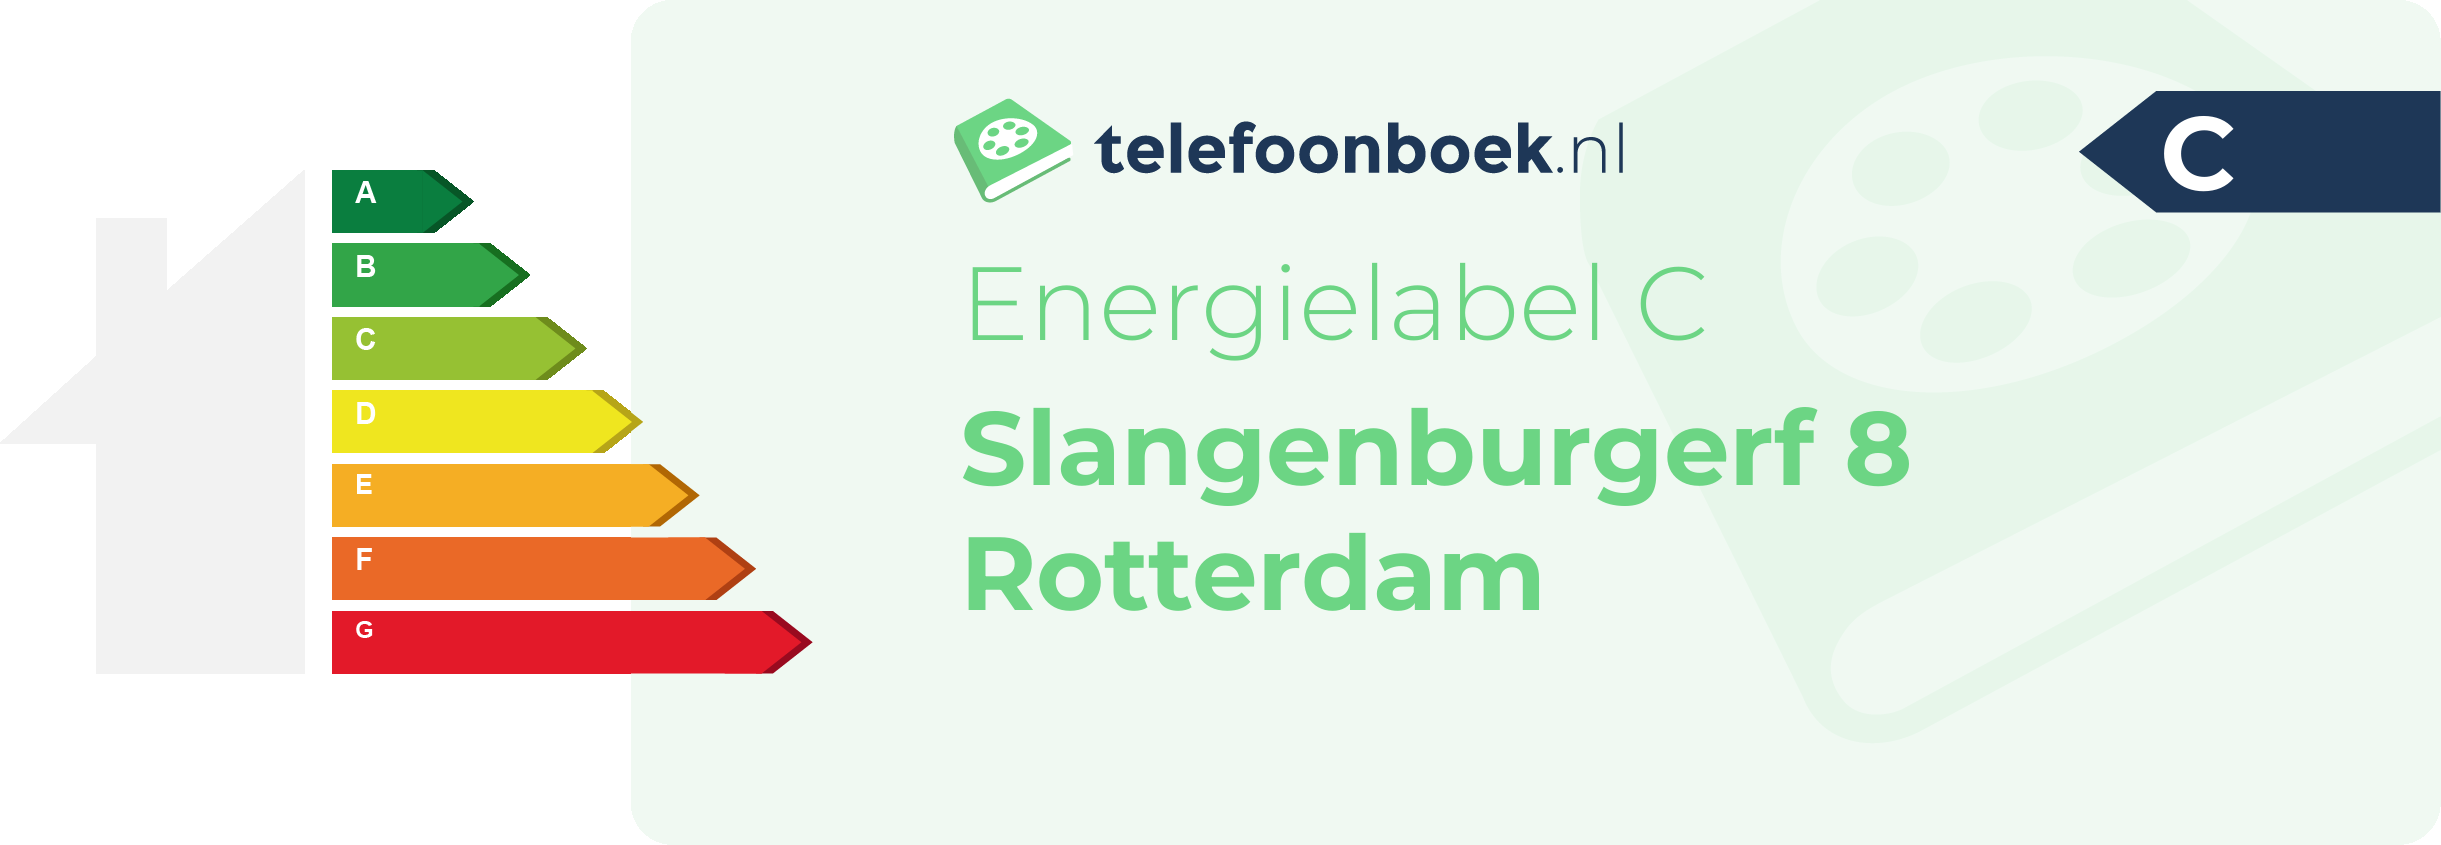 Energielabel Slangenburgerf 8 Rotterdam